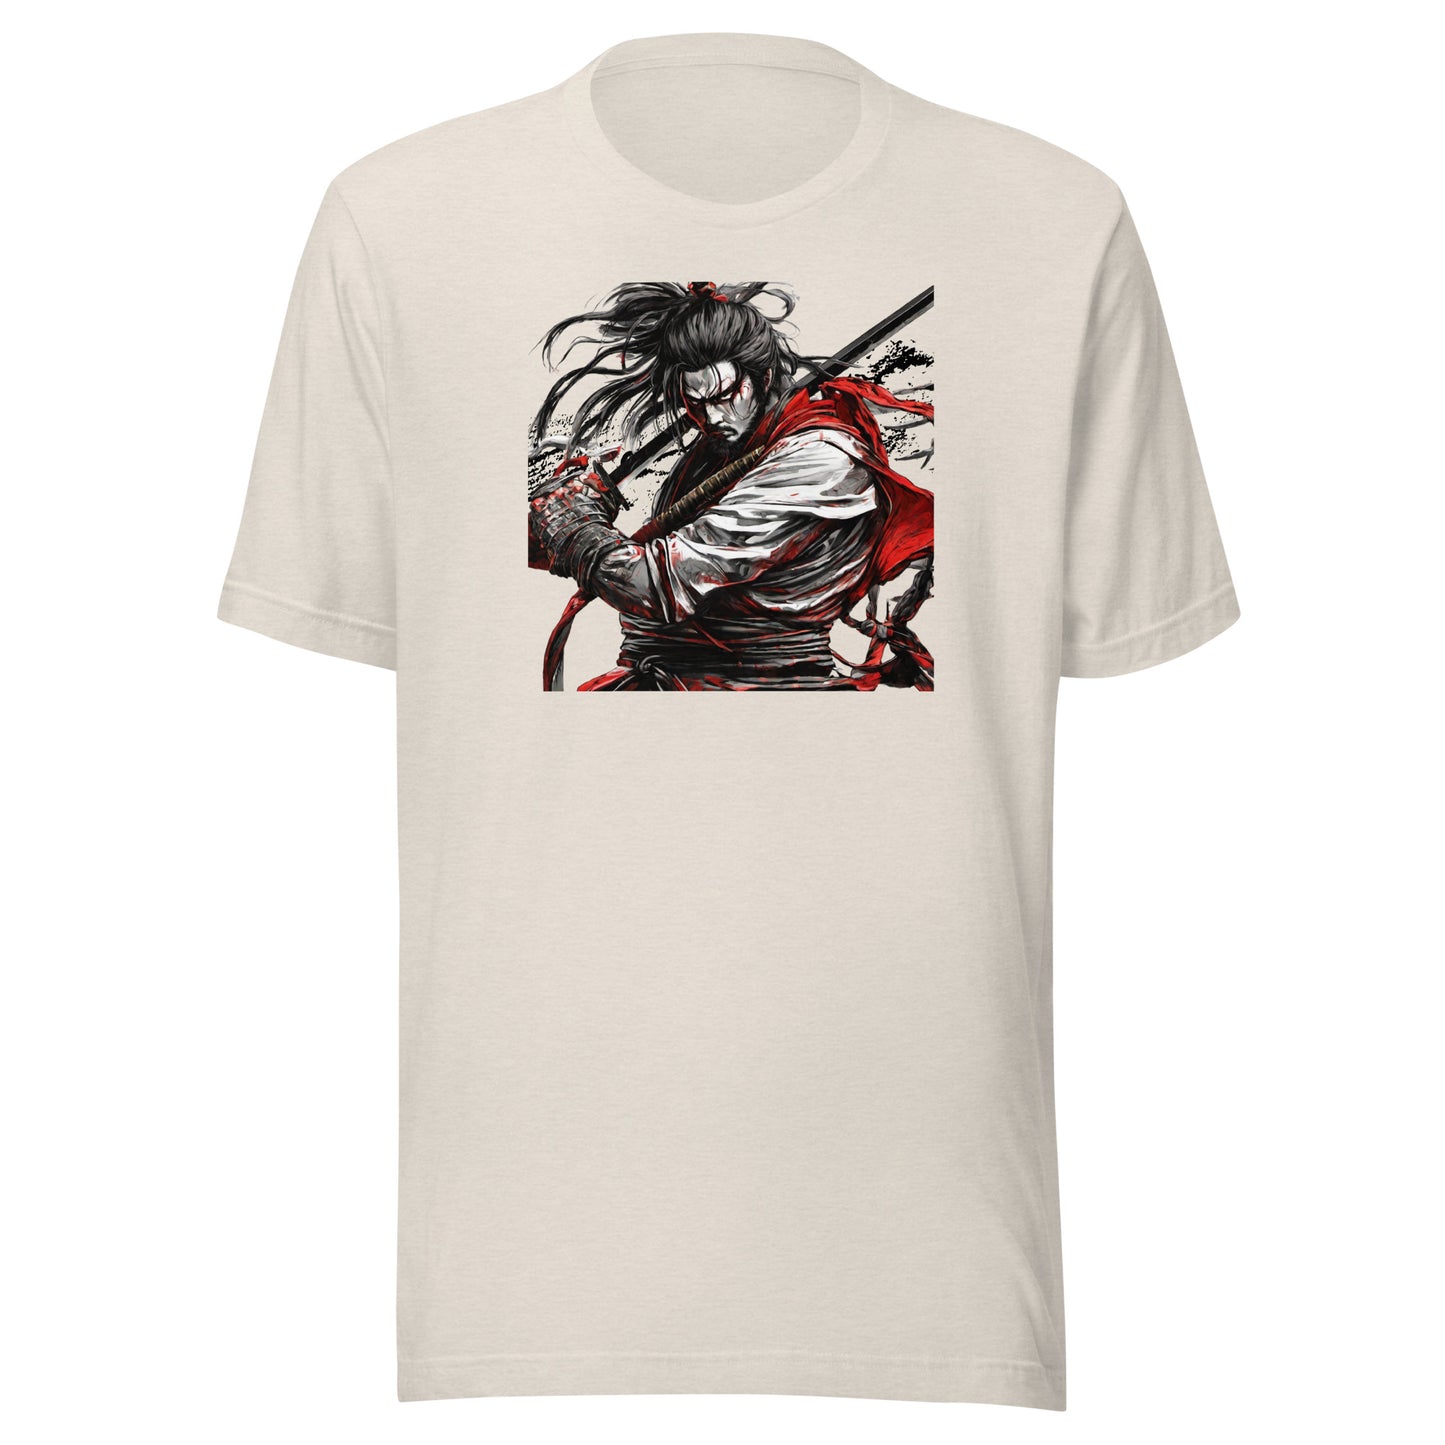 Graceful Warrior Men's Graphic T-Shirt Heather Dust